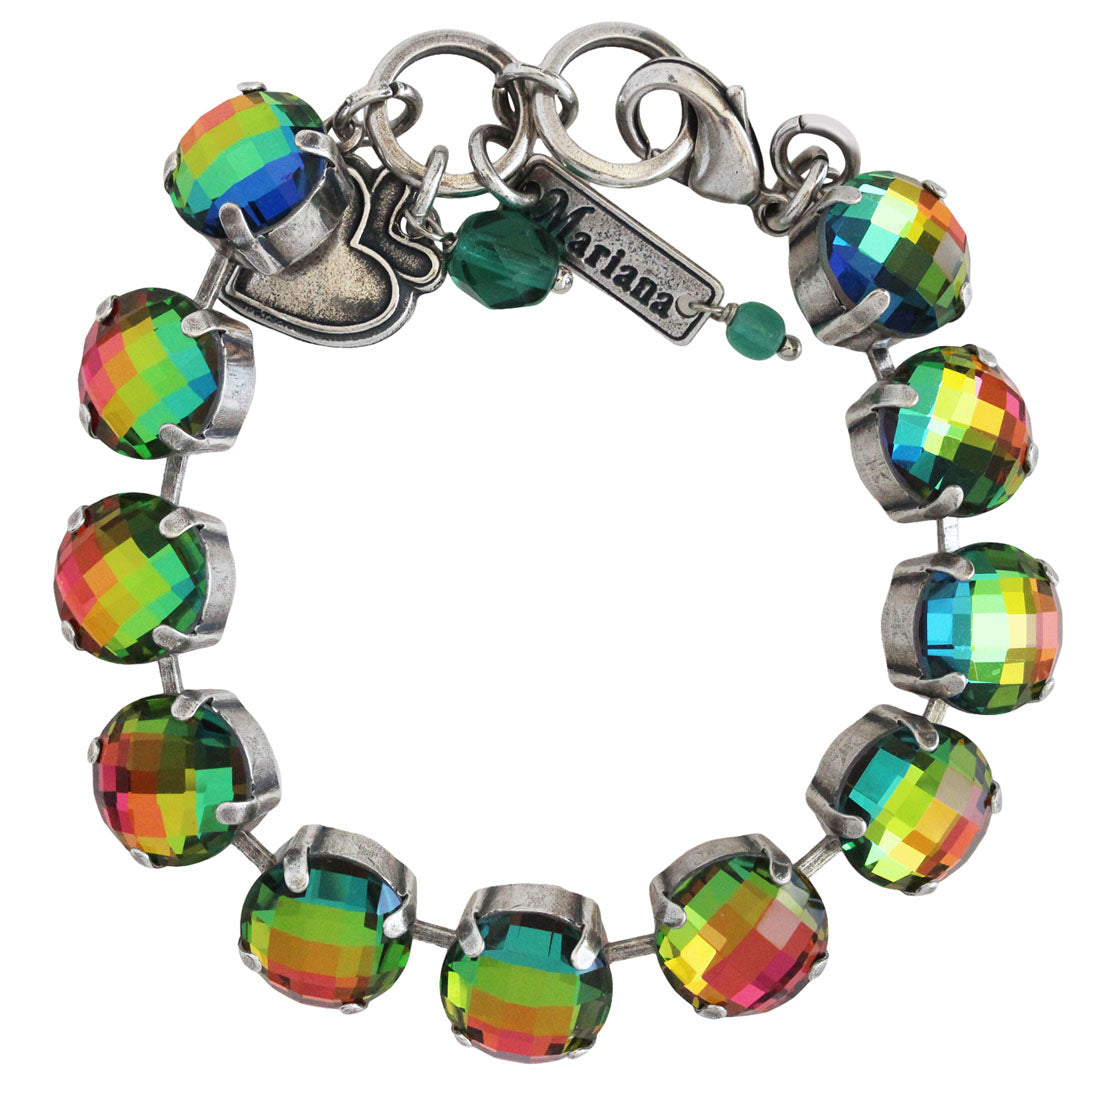 Louis Vuitton Righe Rainbow Titanium Bracelet